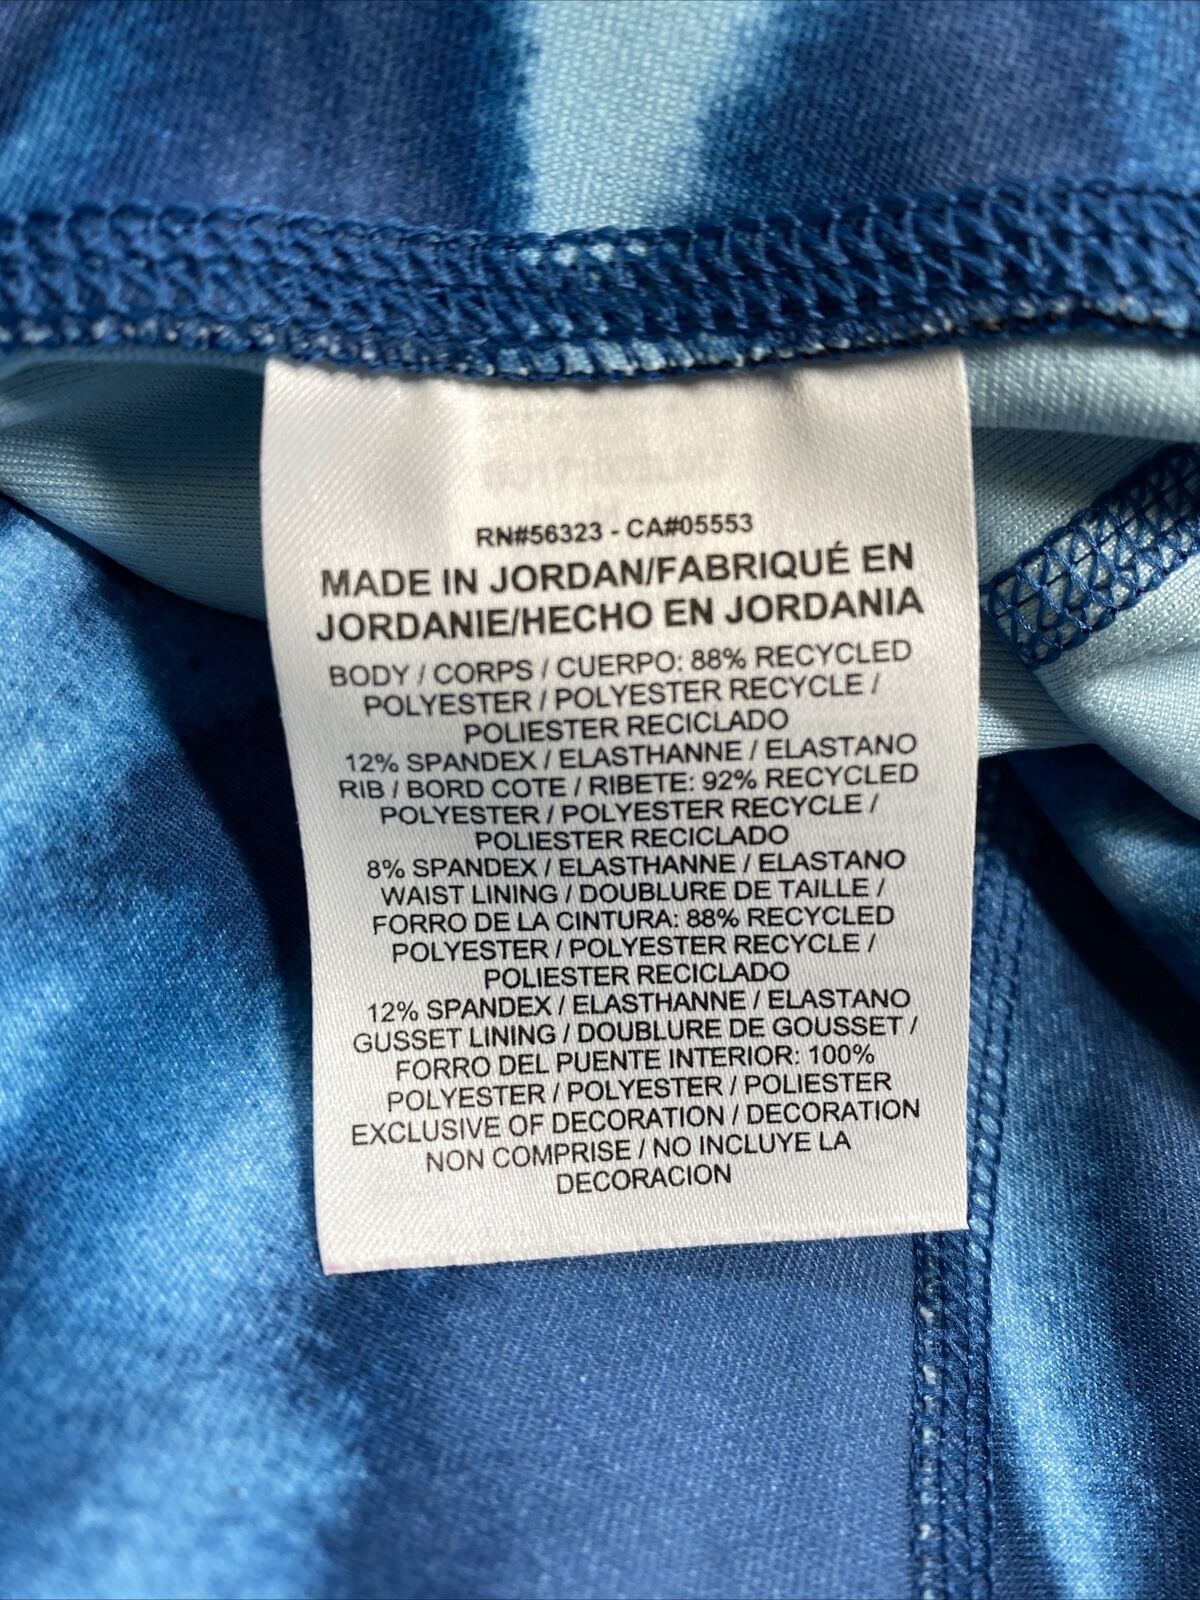 NikeLeggings capri ajustados Power Legend azules para mujer - M